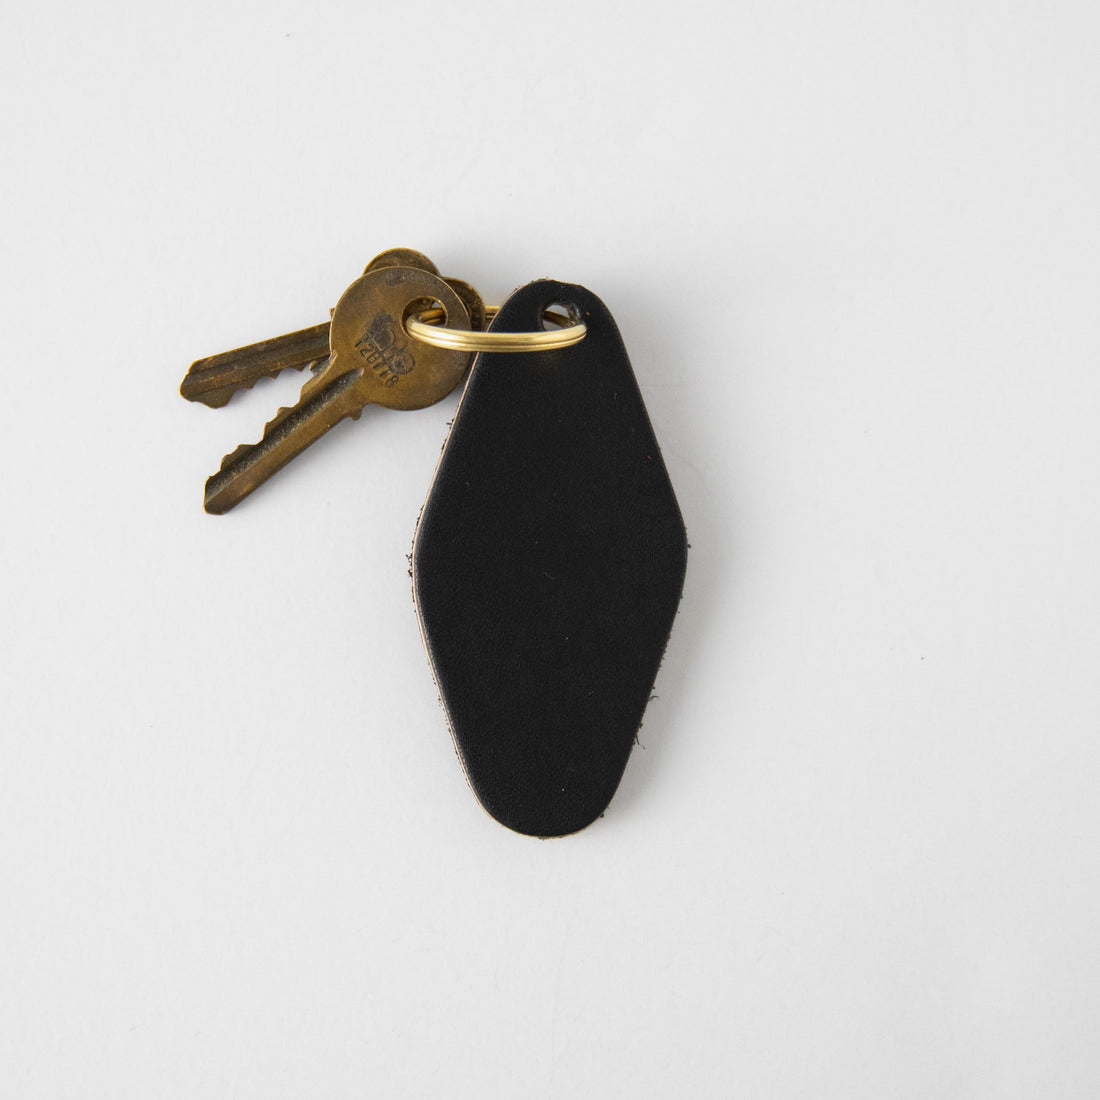 TAP & DYE Handmade Leather Key Fobs, handmade leather key fobs